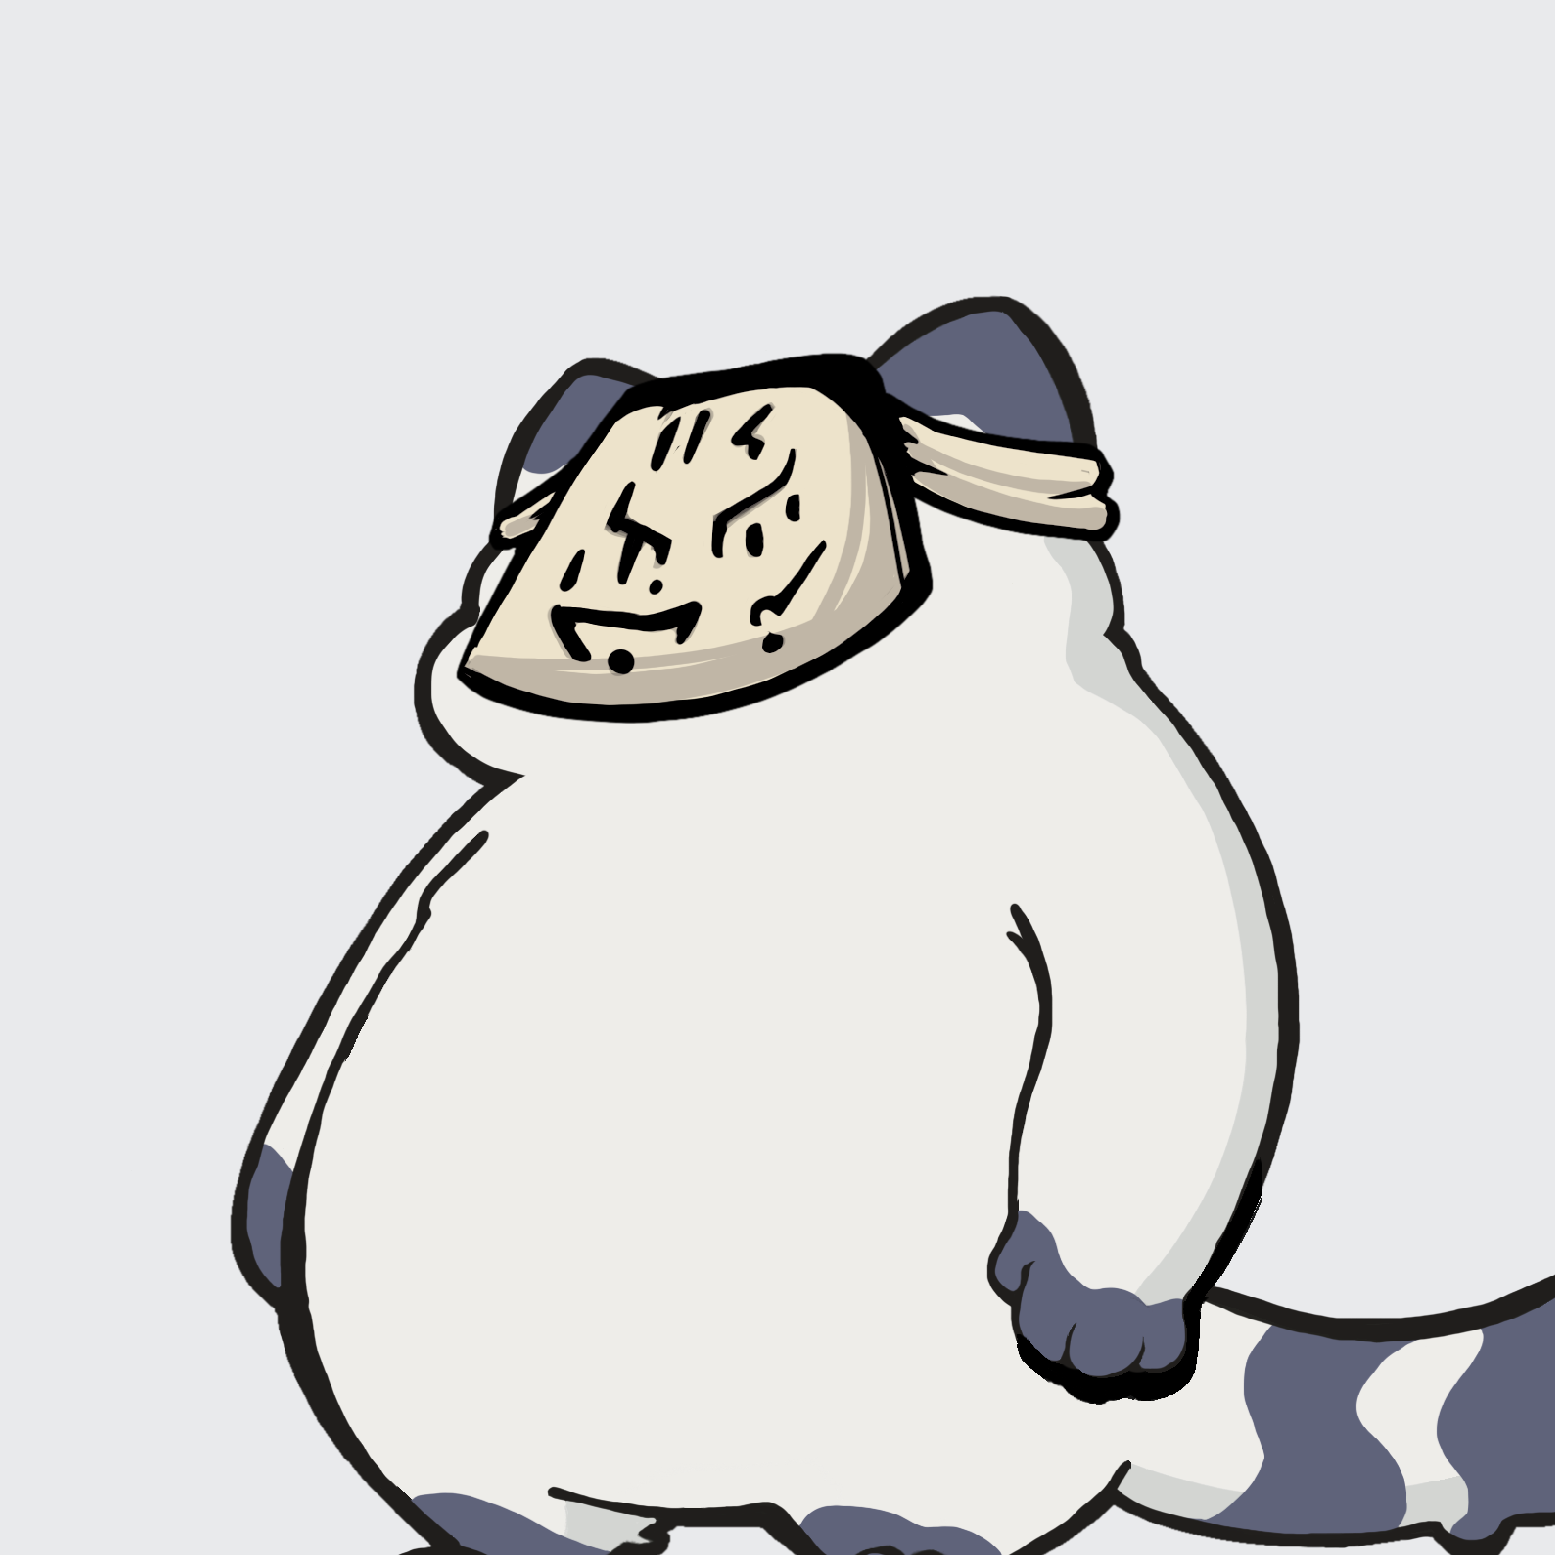 Degen Fat Cat the 15864th